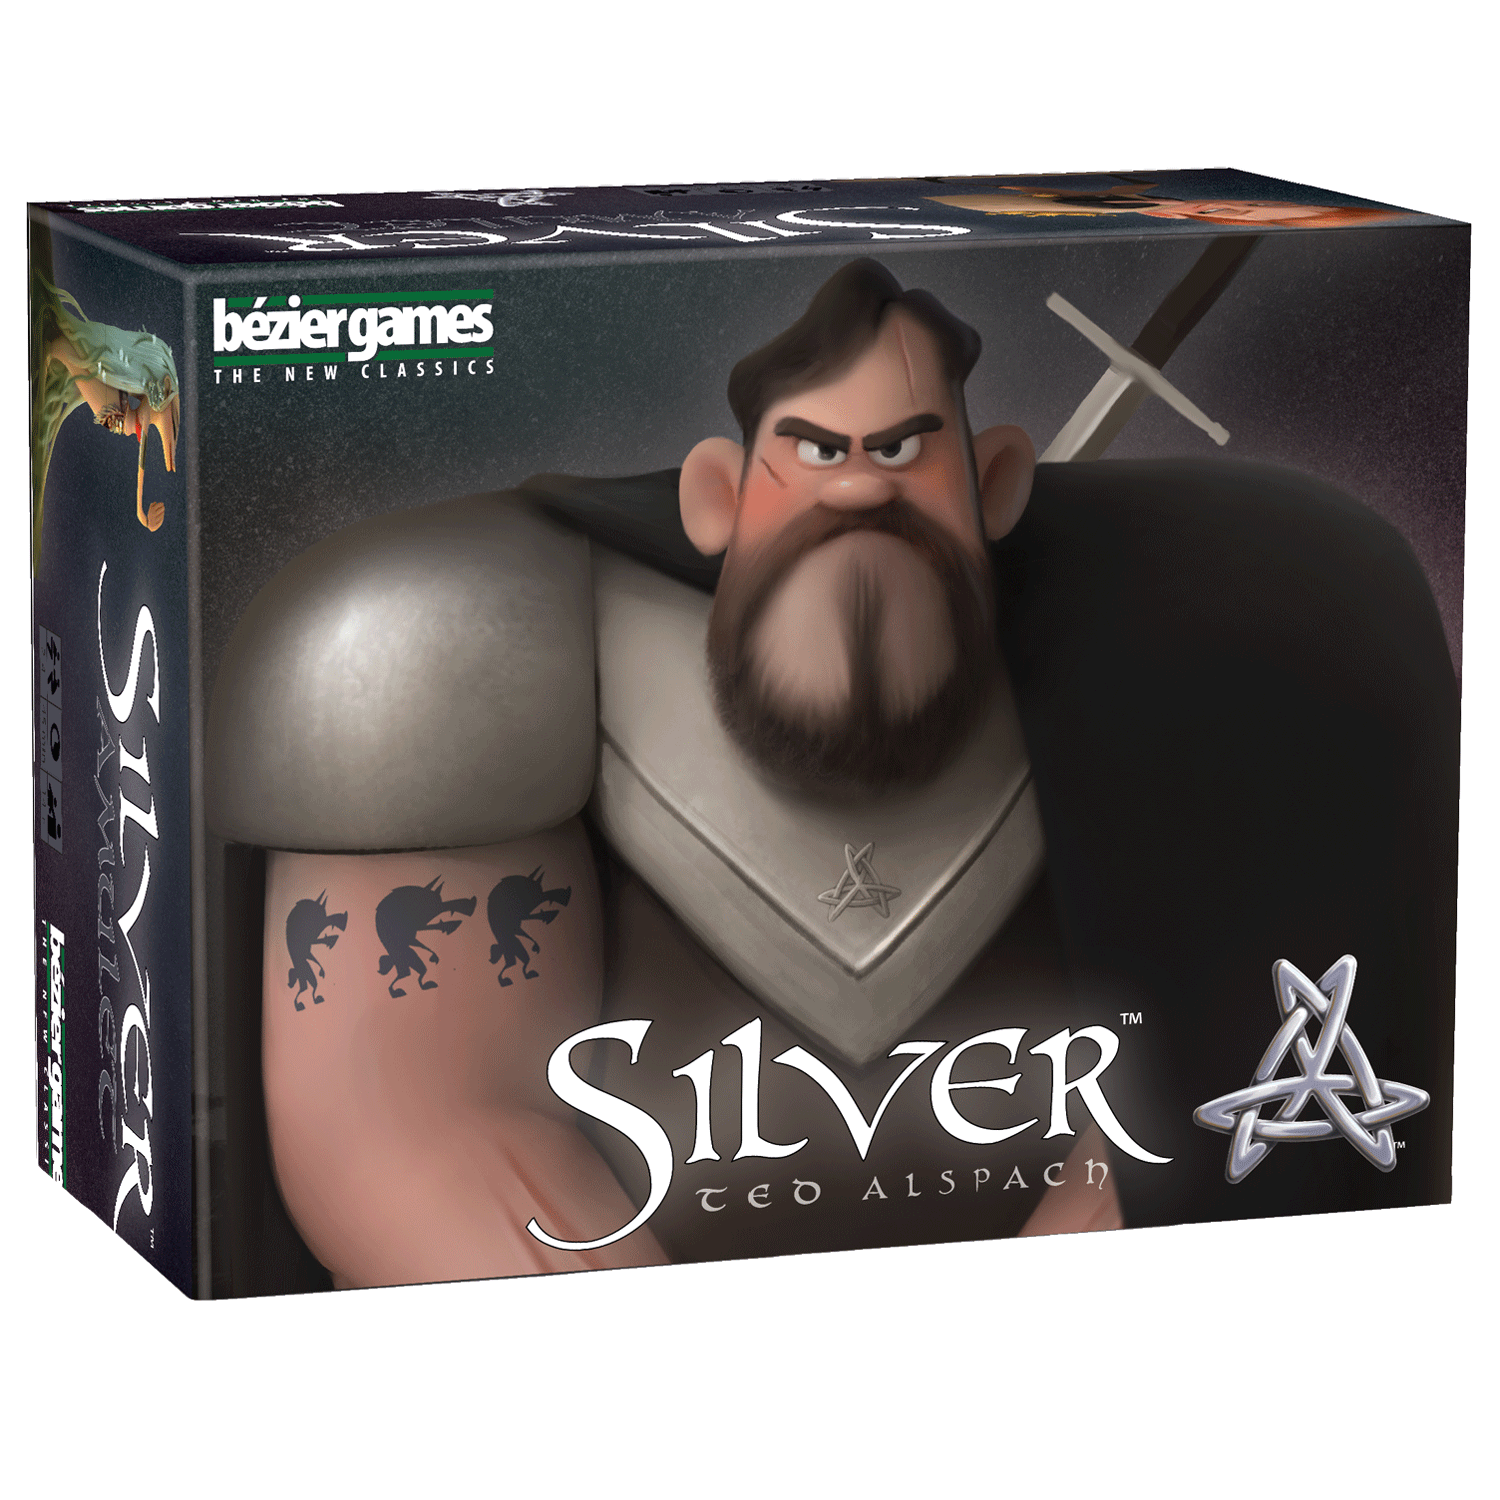 Silver Bullet - Bezier Games